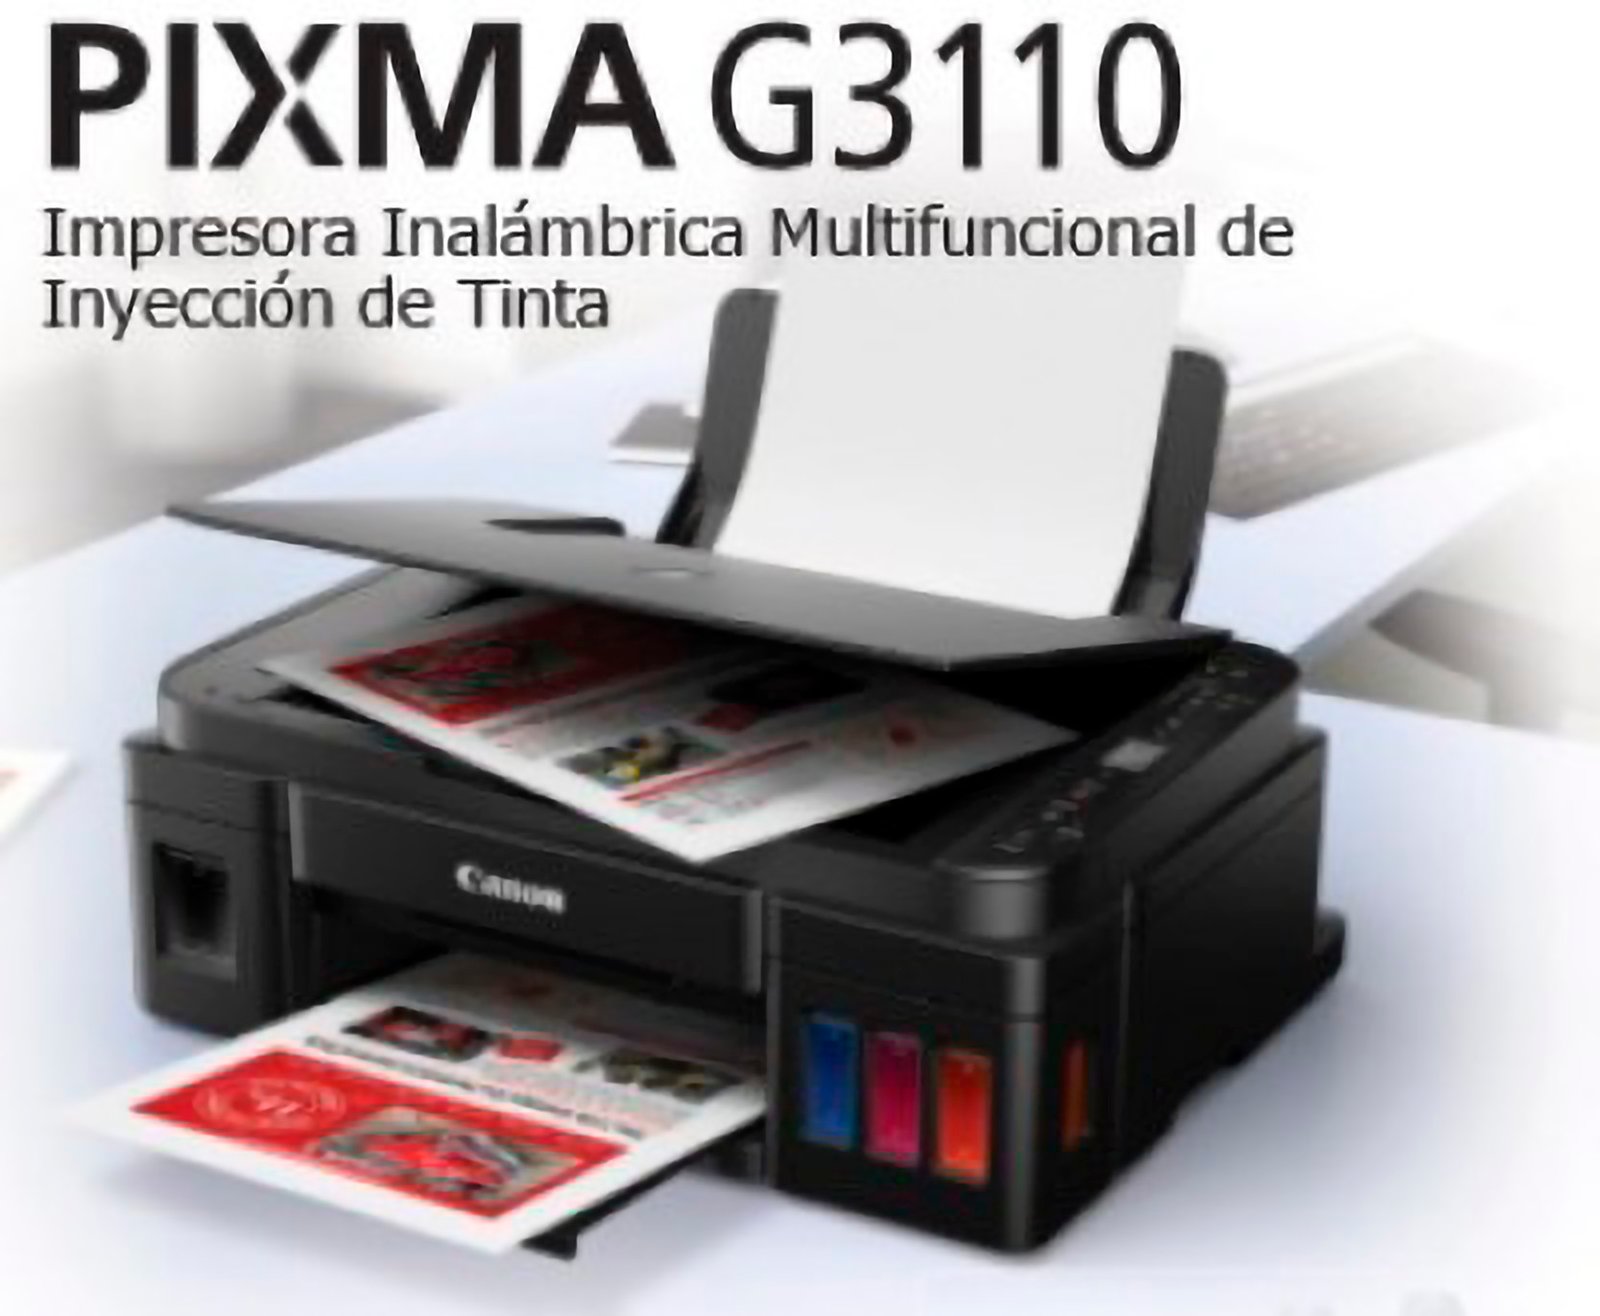 Impresora Multifuncional Canon Pixma G3110 Tinta continua Color WiFi USB